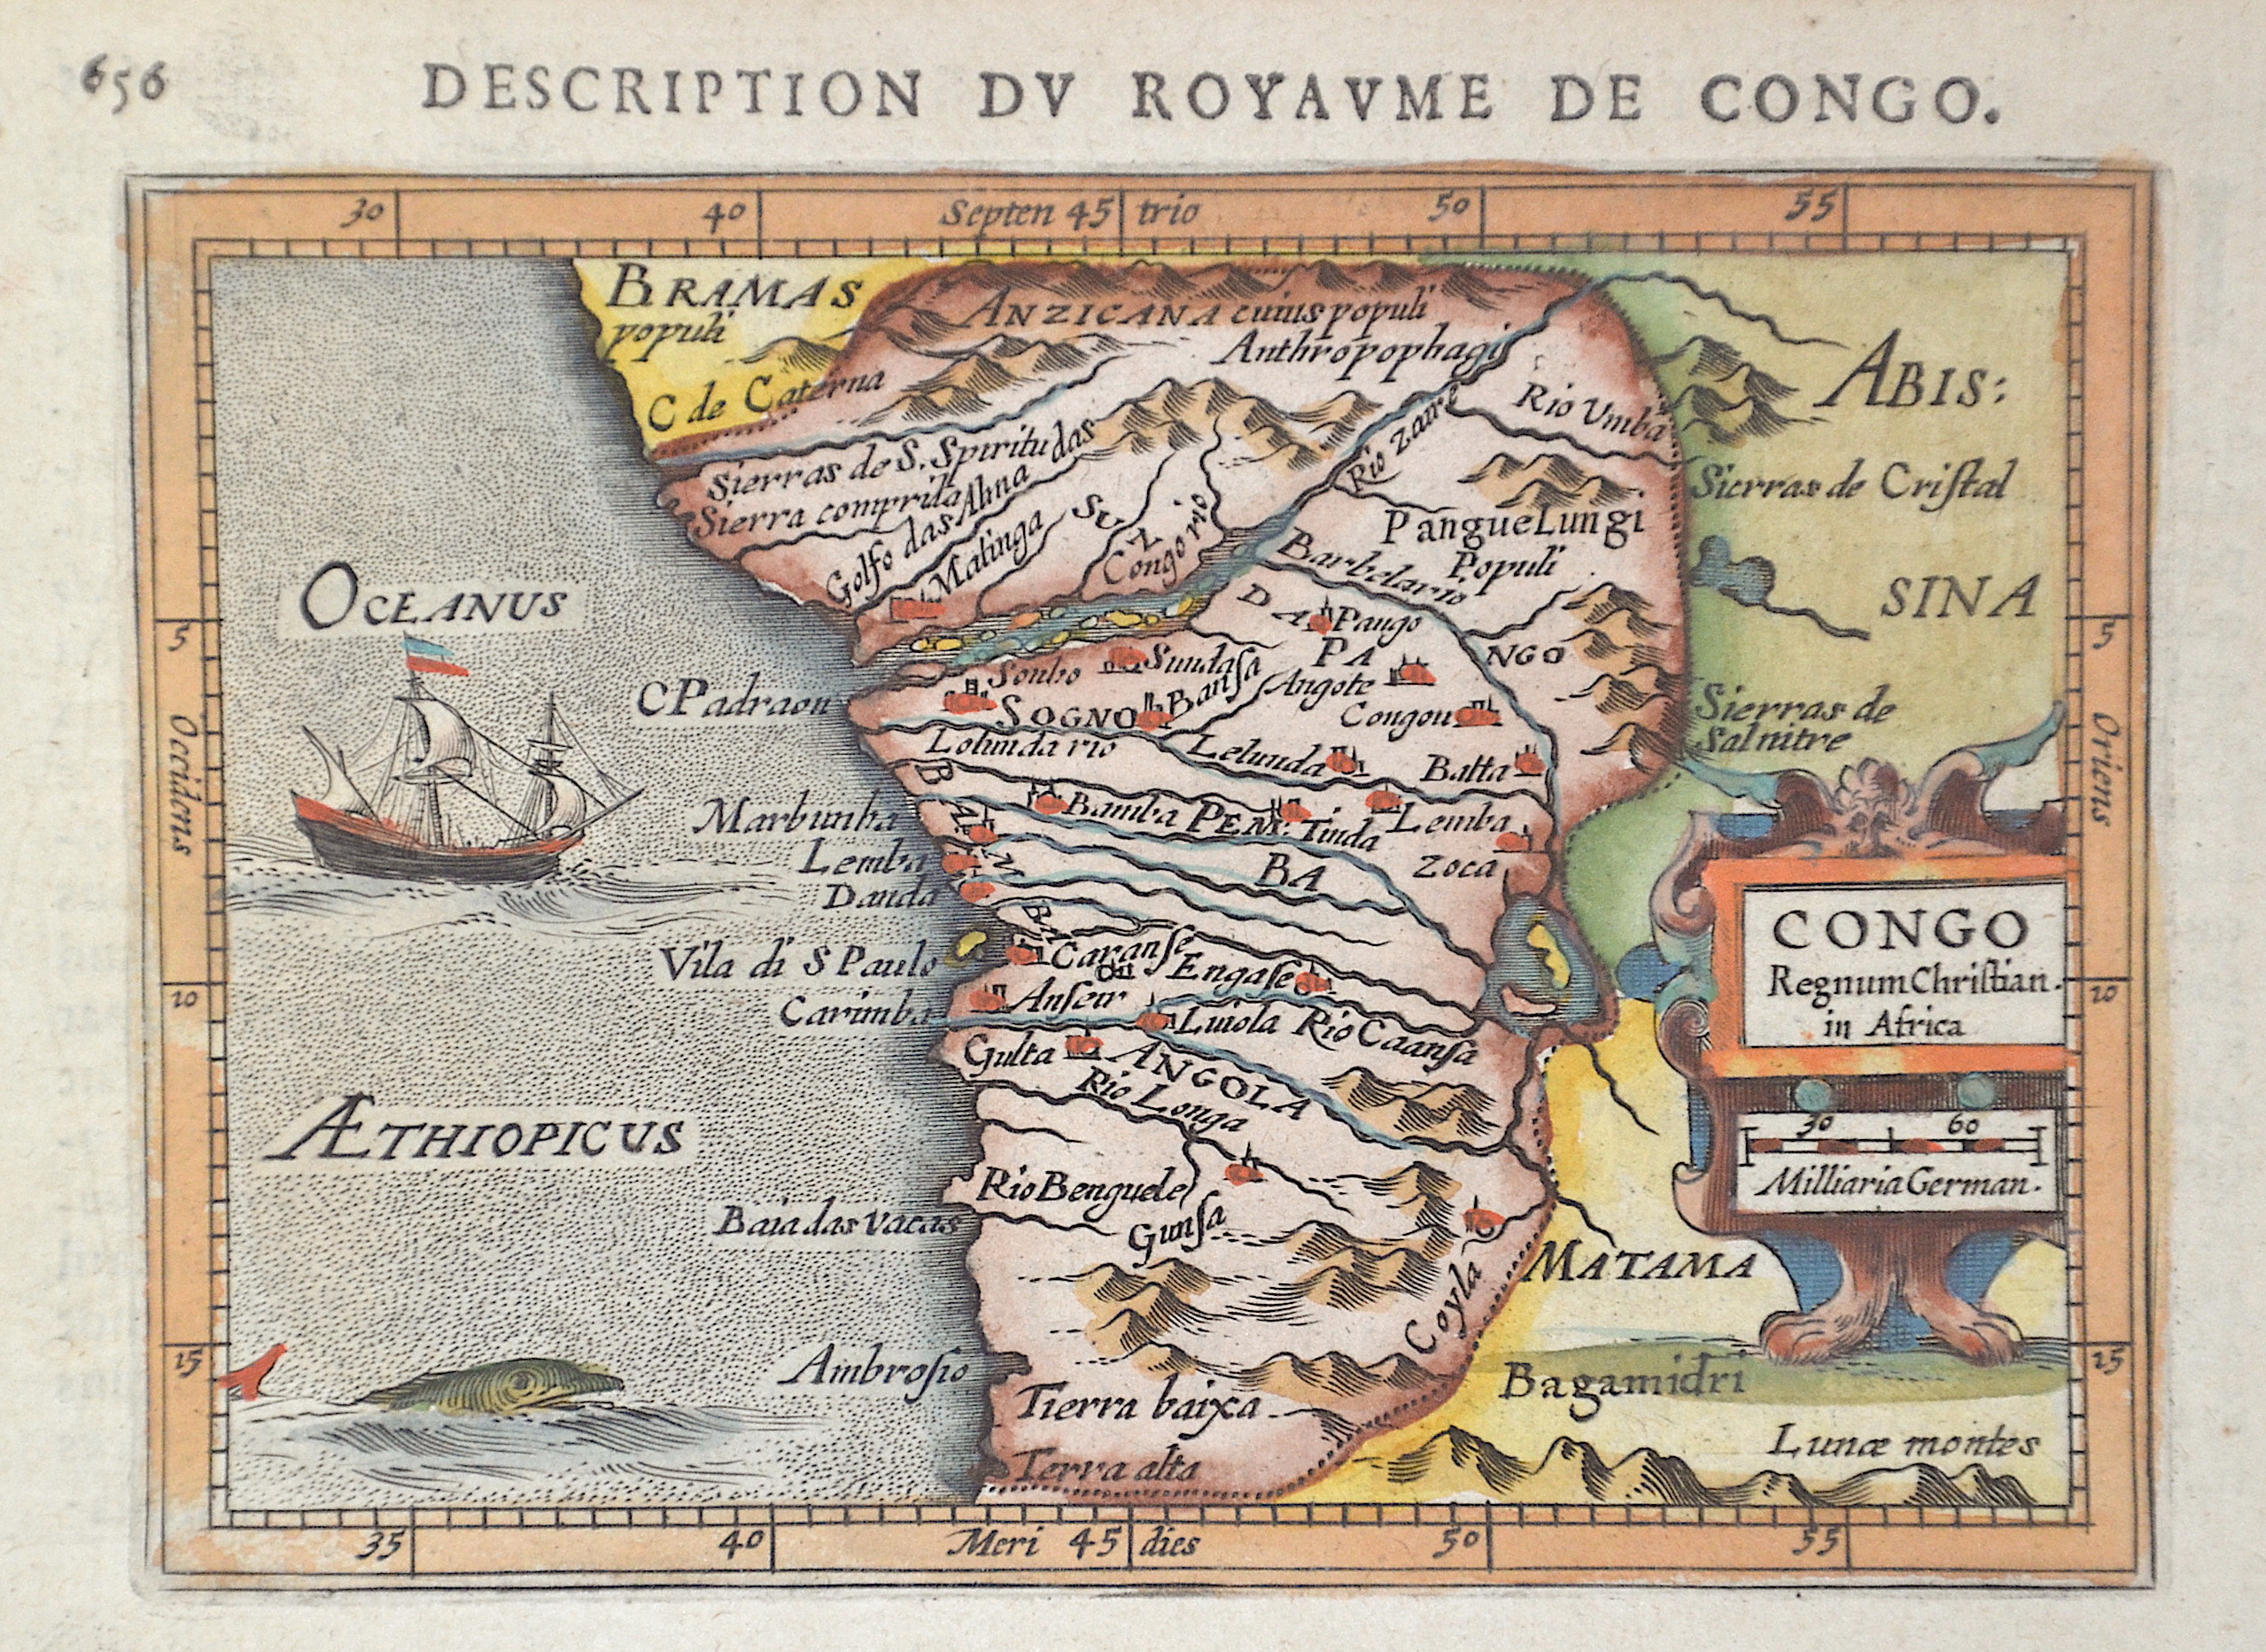 Bertius  Description du royaume de Congo. / Congo Regnum Christian in Africa.